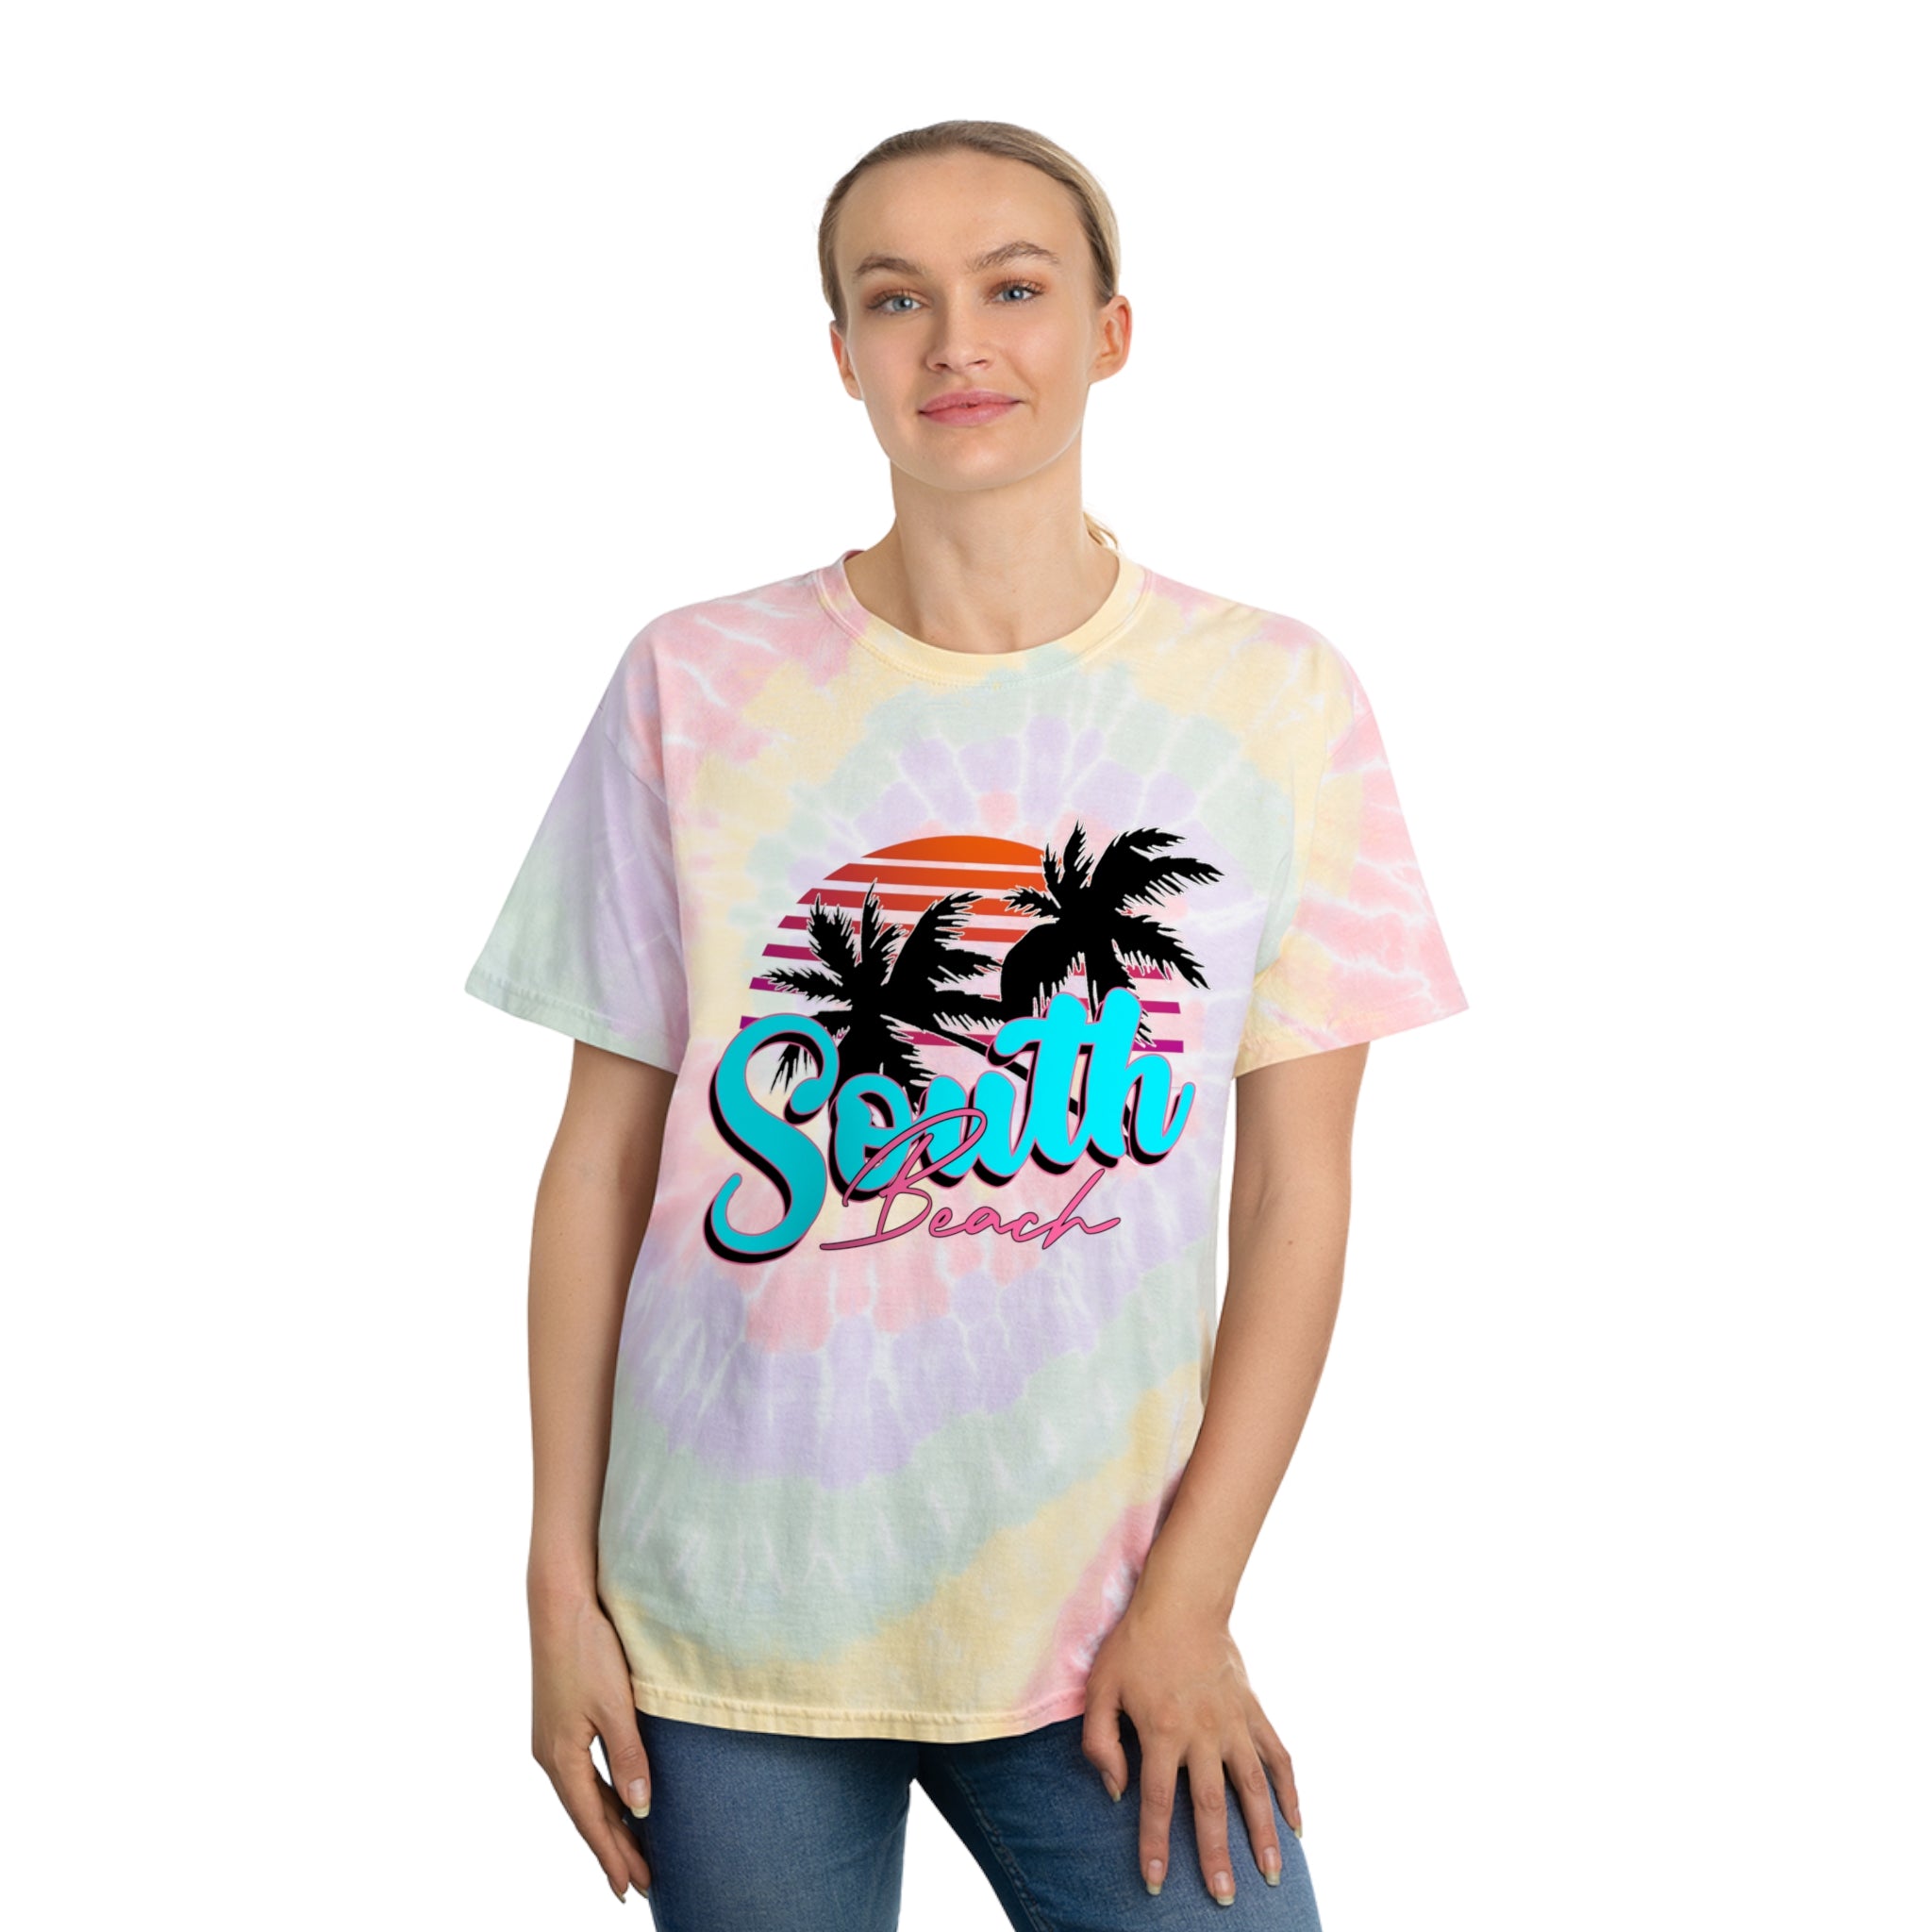 Retro 8 South Beach Lebron's Tie-Dye T-Shirt